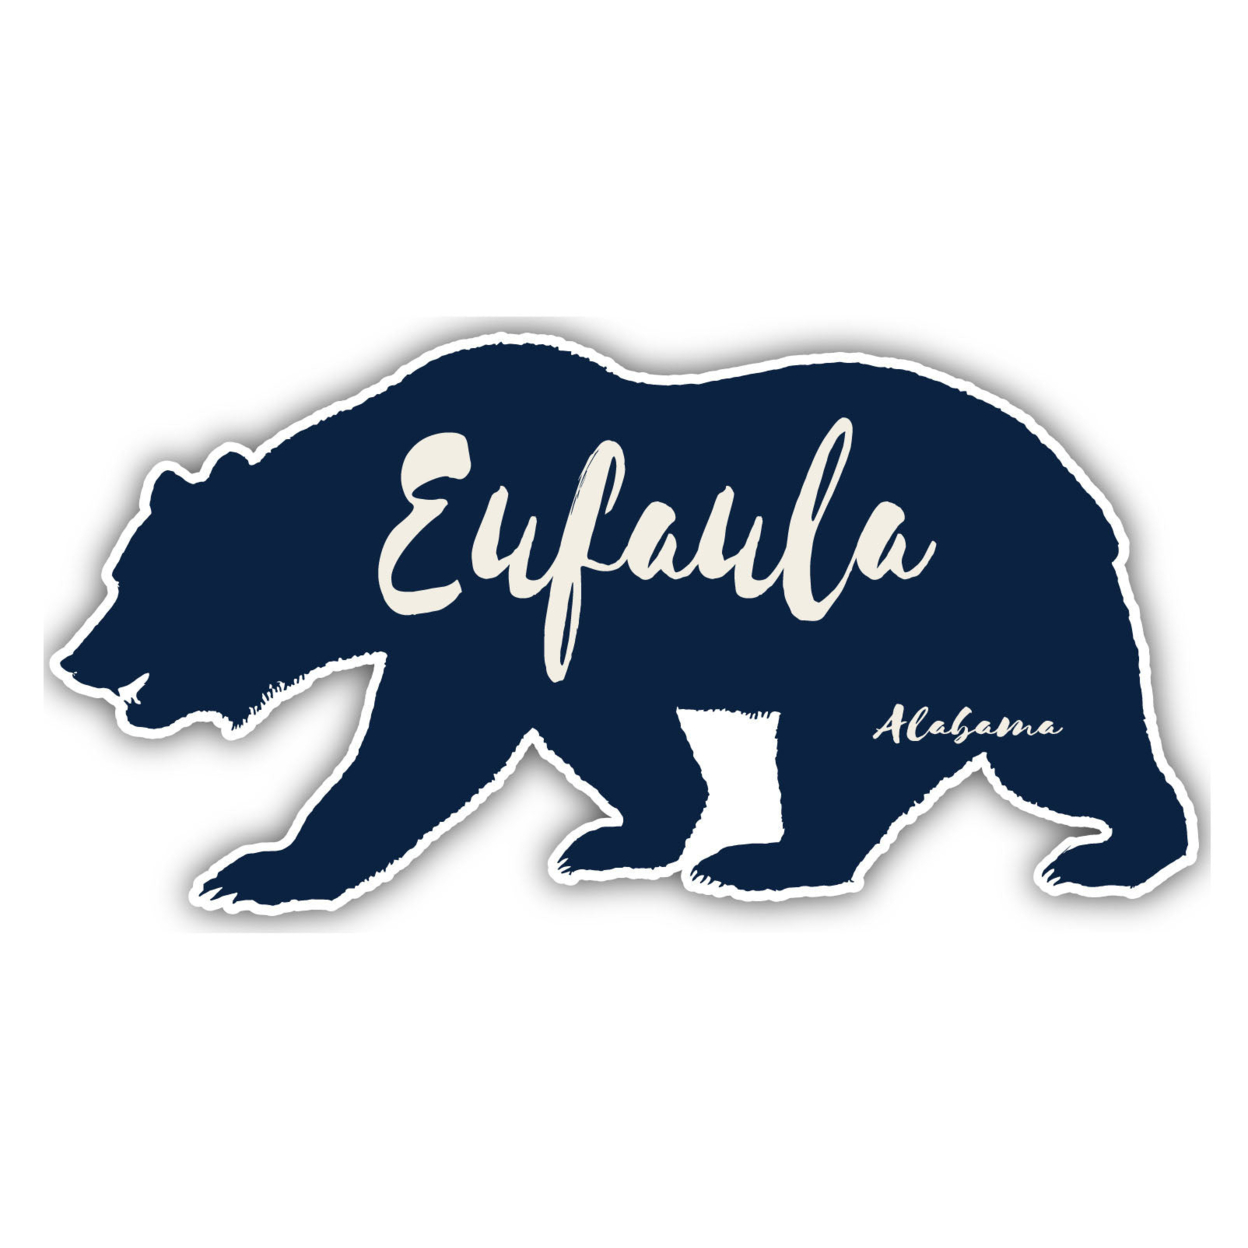 Eufaula Alabama Souvenir Decorative Stickers (Choose Theme And Size) - 4-Pack, 6-Inch, Bear